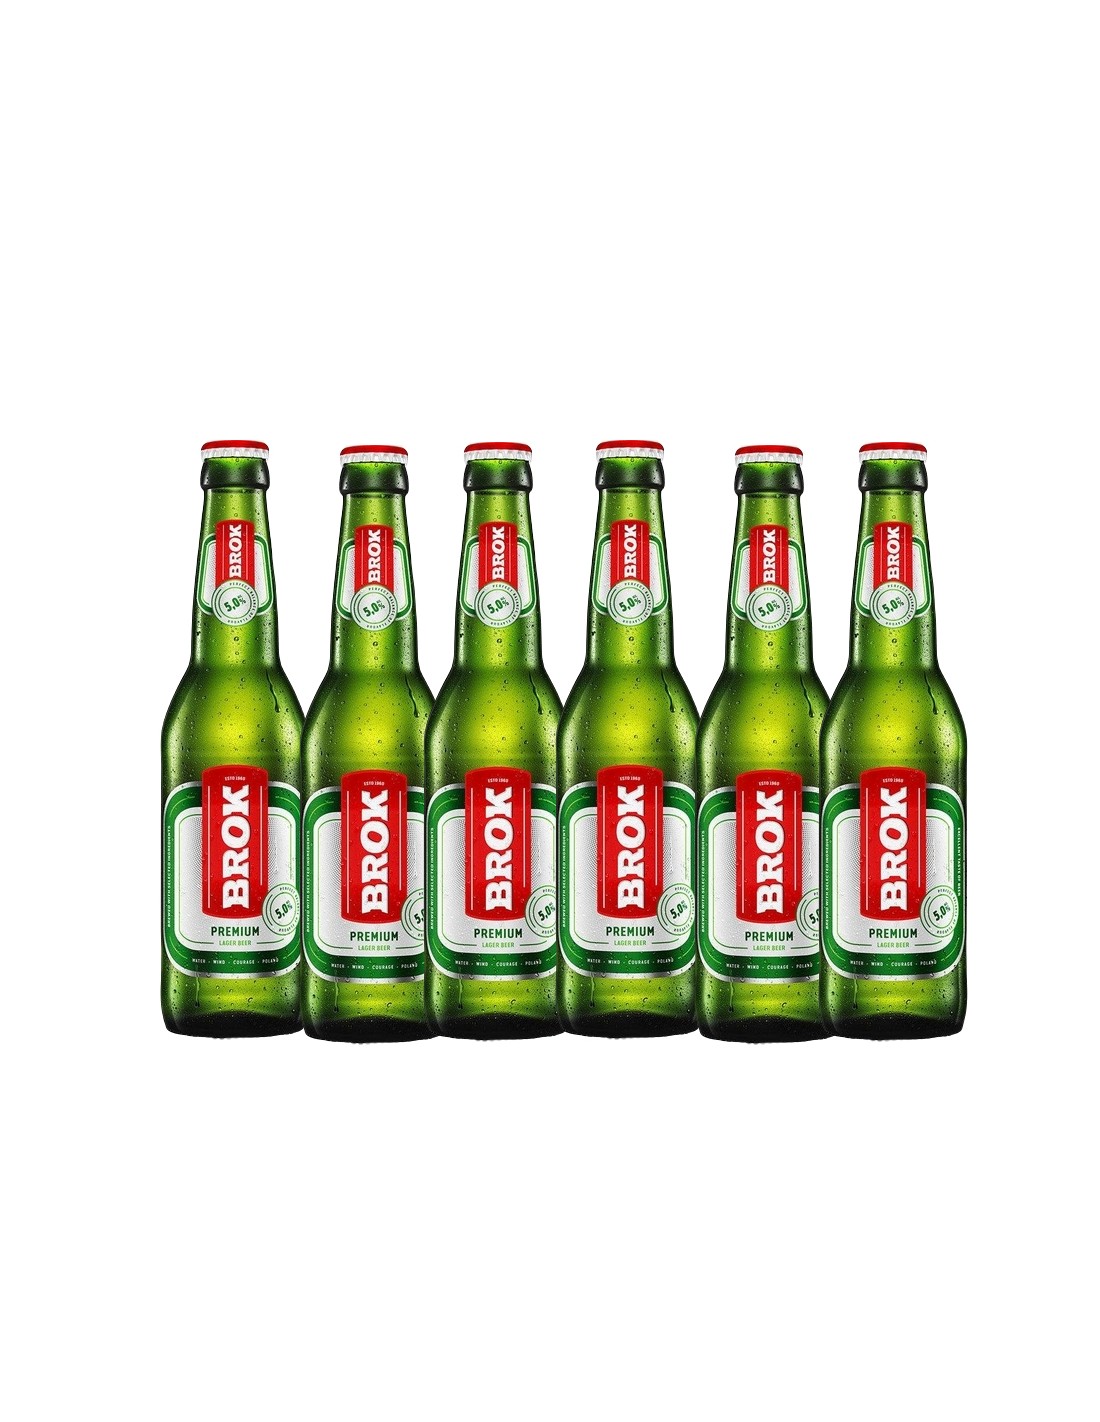 Pachet 6 bucati bere blonda Brok Premium, 5% alc., 0.5L, Polonia alcooldiscount.ro